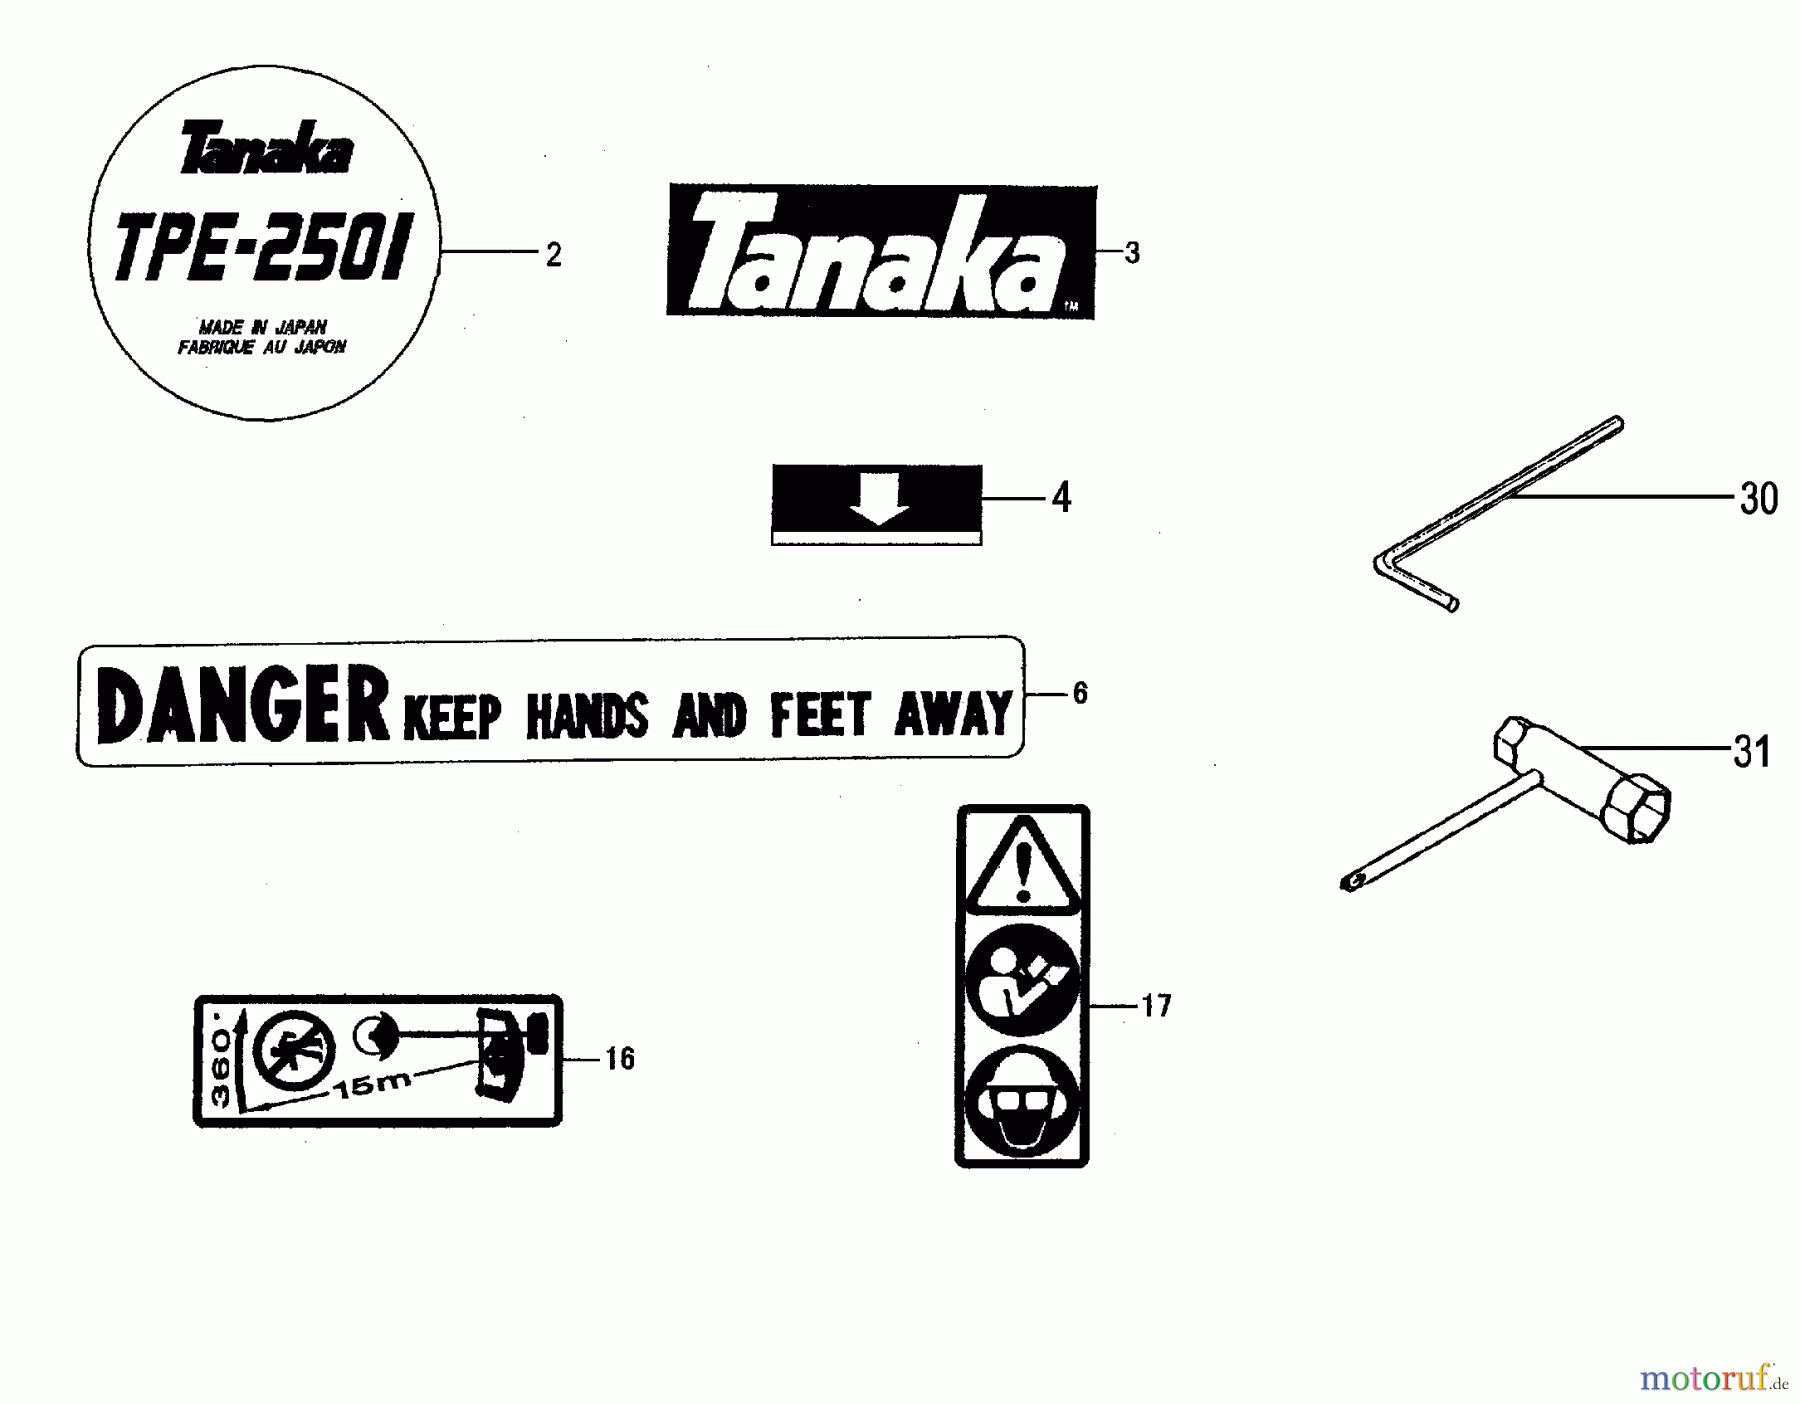  Tanaka Kantenschneider TPE-2501 - Tanaka Portable Edger Decals, Tools